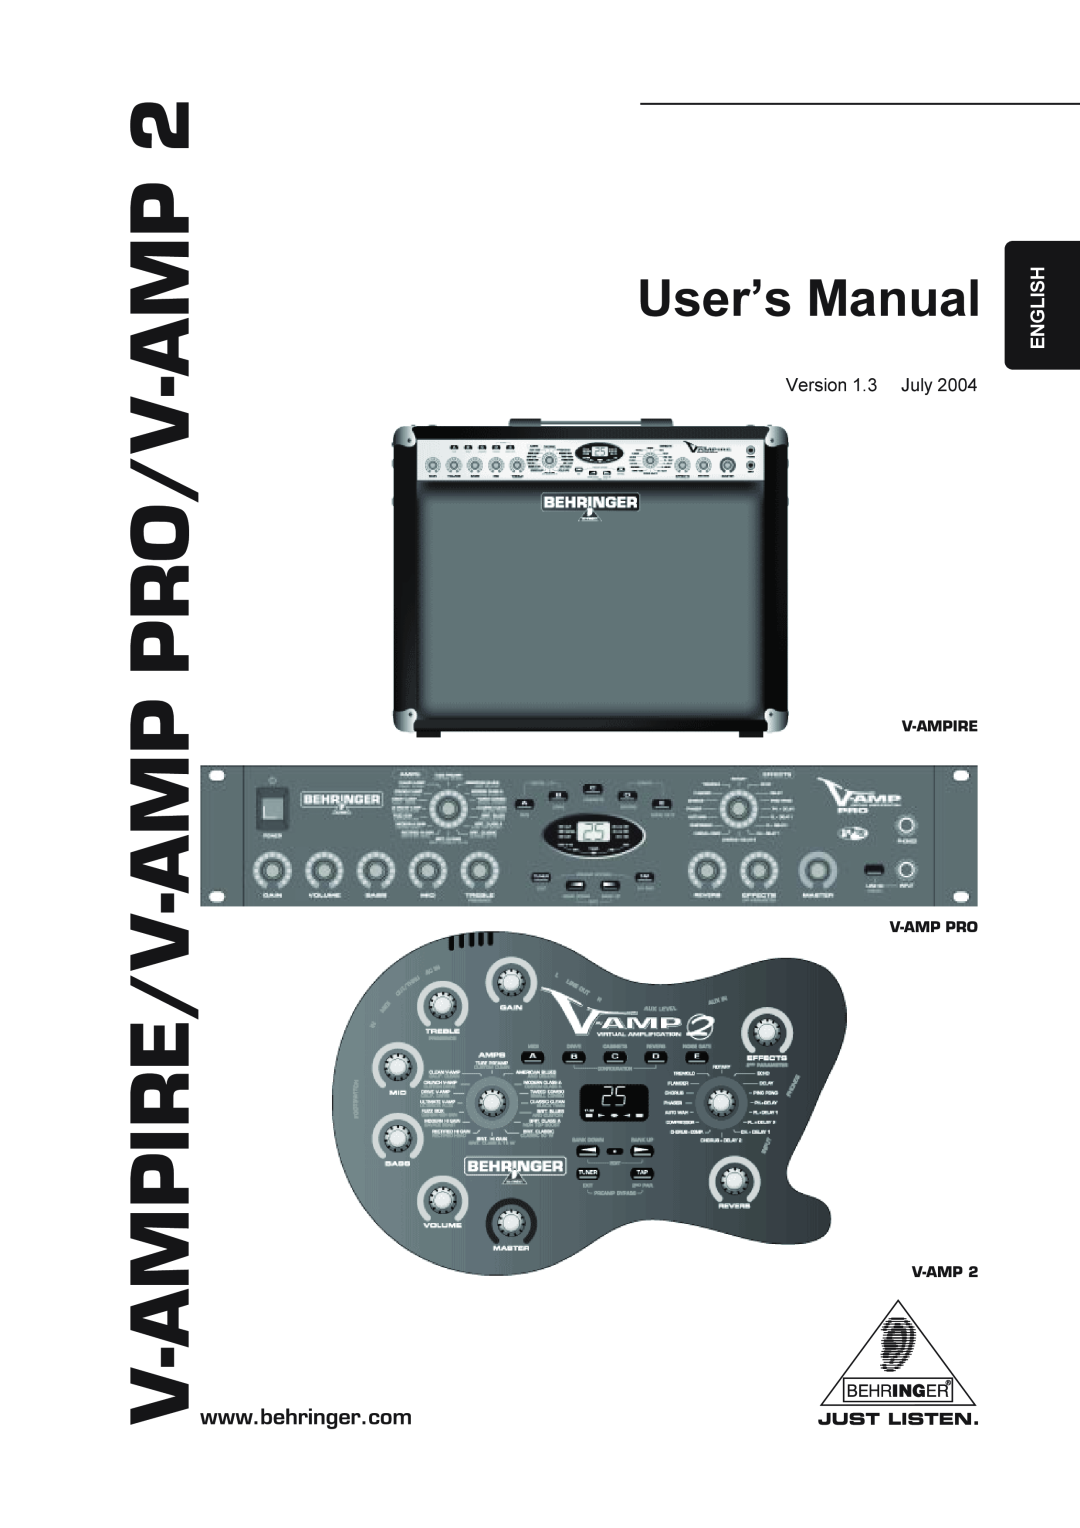 Mesa/Boogie manual V-AMPIRE/V-AMP PRO/V-AMP2, English, Version 1.3 July, V-AMPIRE V-AMPPRO V-AMP2 